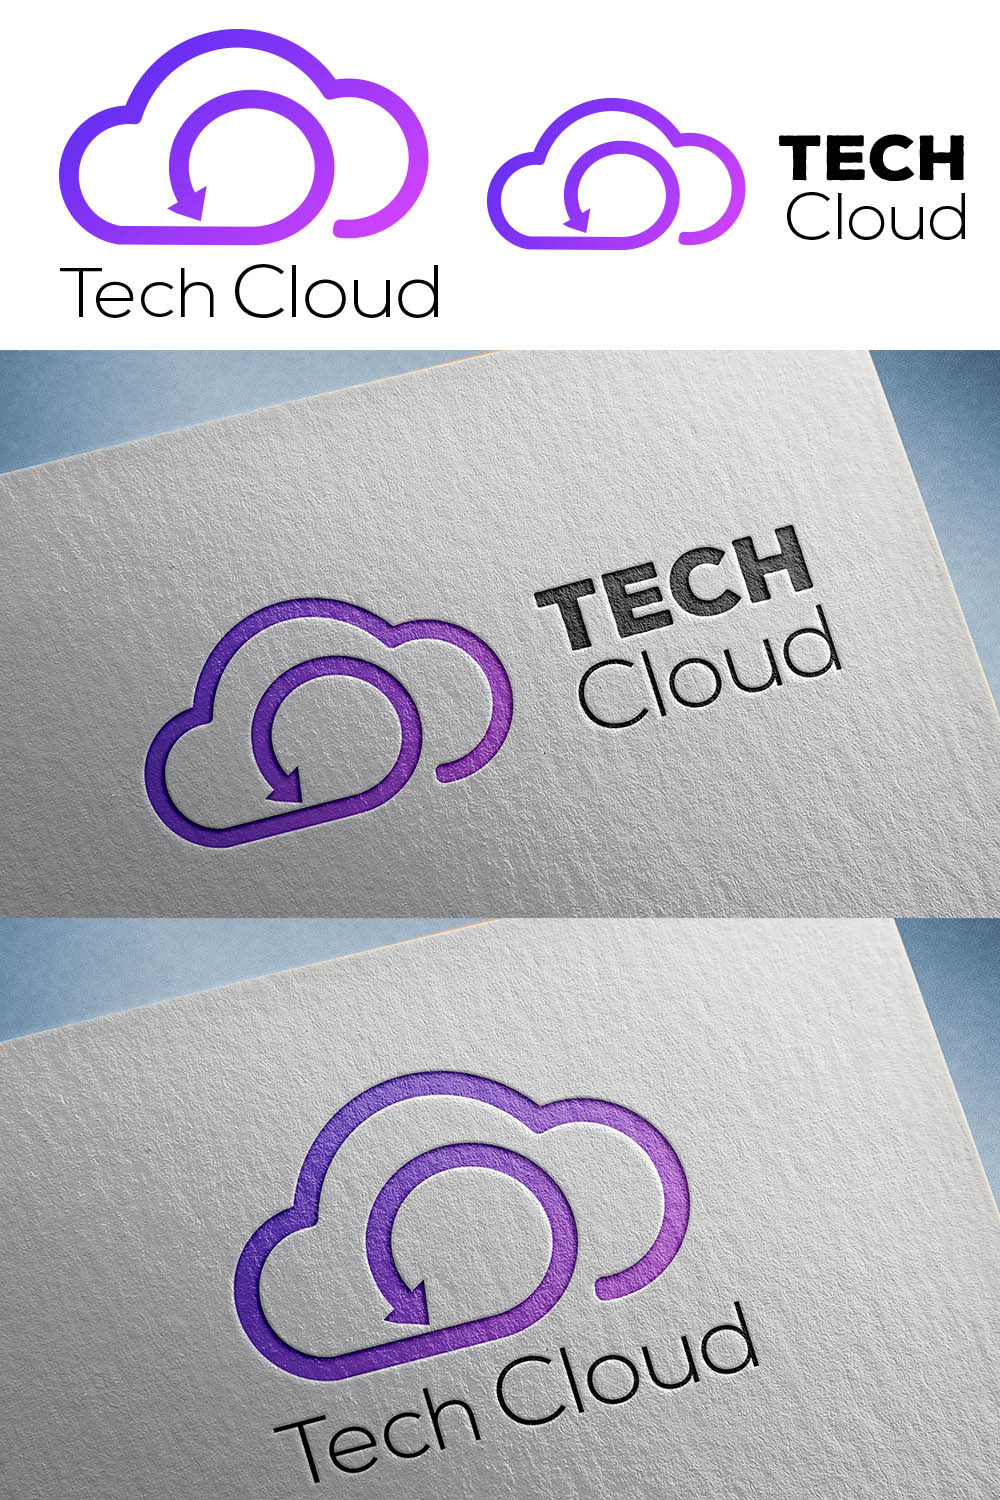 Tech Cloud Logo Template Pinterest image.